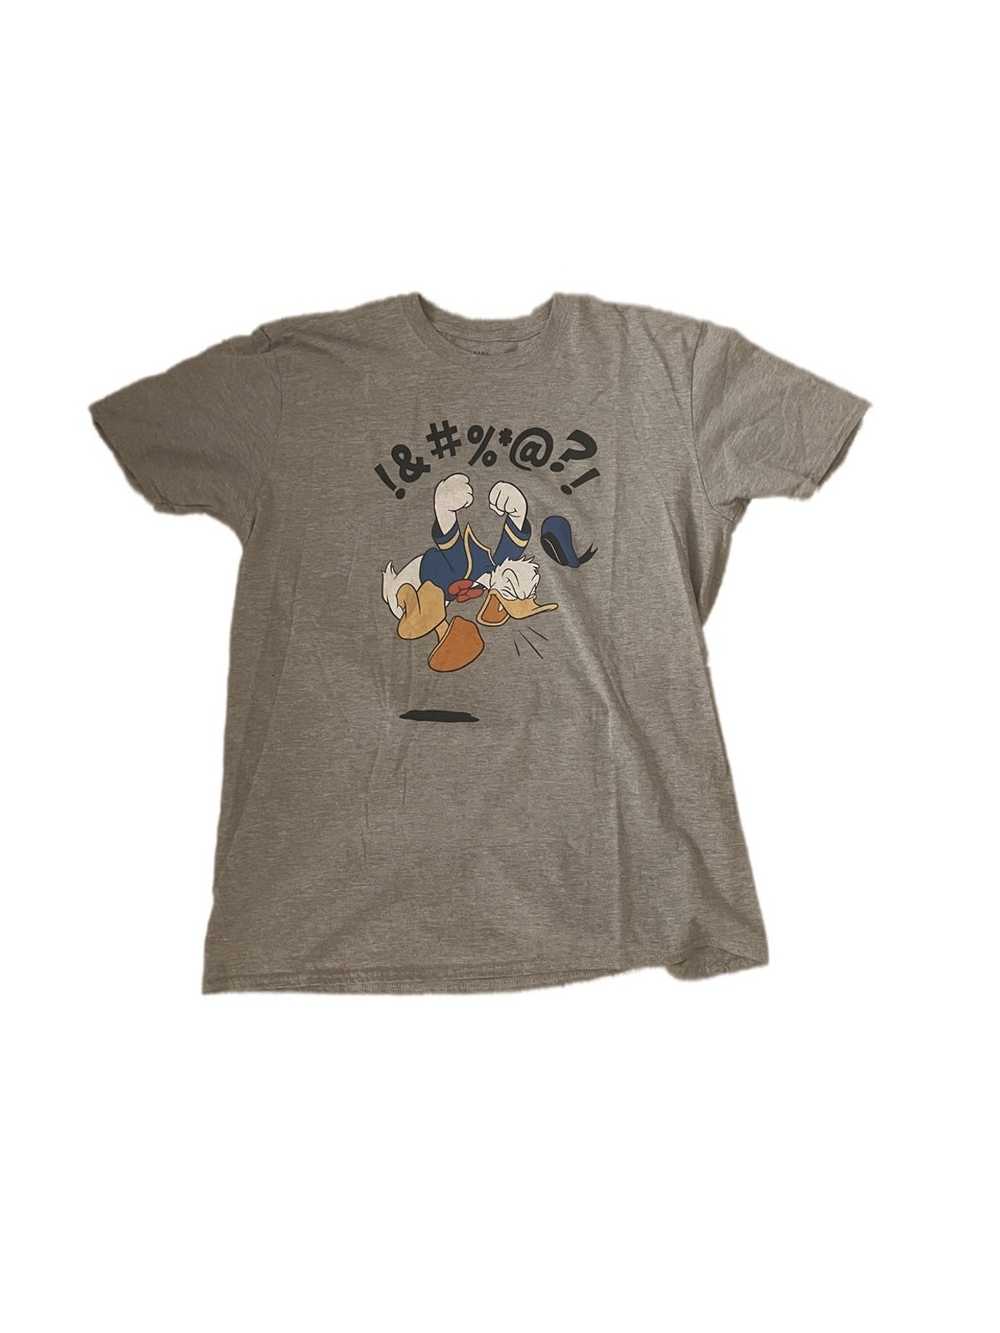 Houston Astros Mickey Mouse Donald Duck Goofy - Rookbrand